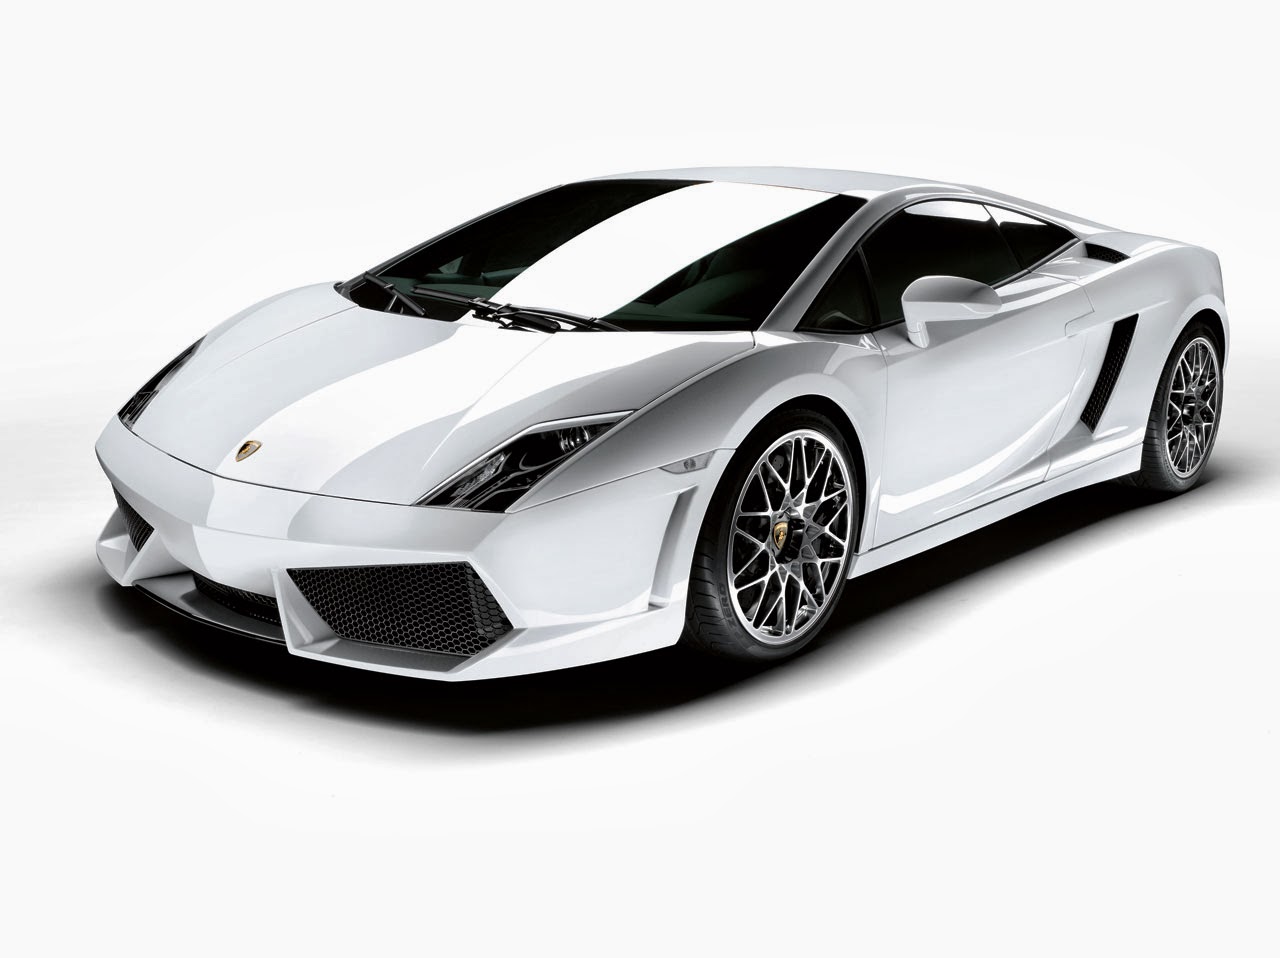 Today Sports Car: Today Lamborghini Gallardo sports car 2014